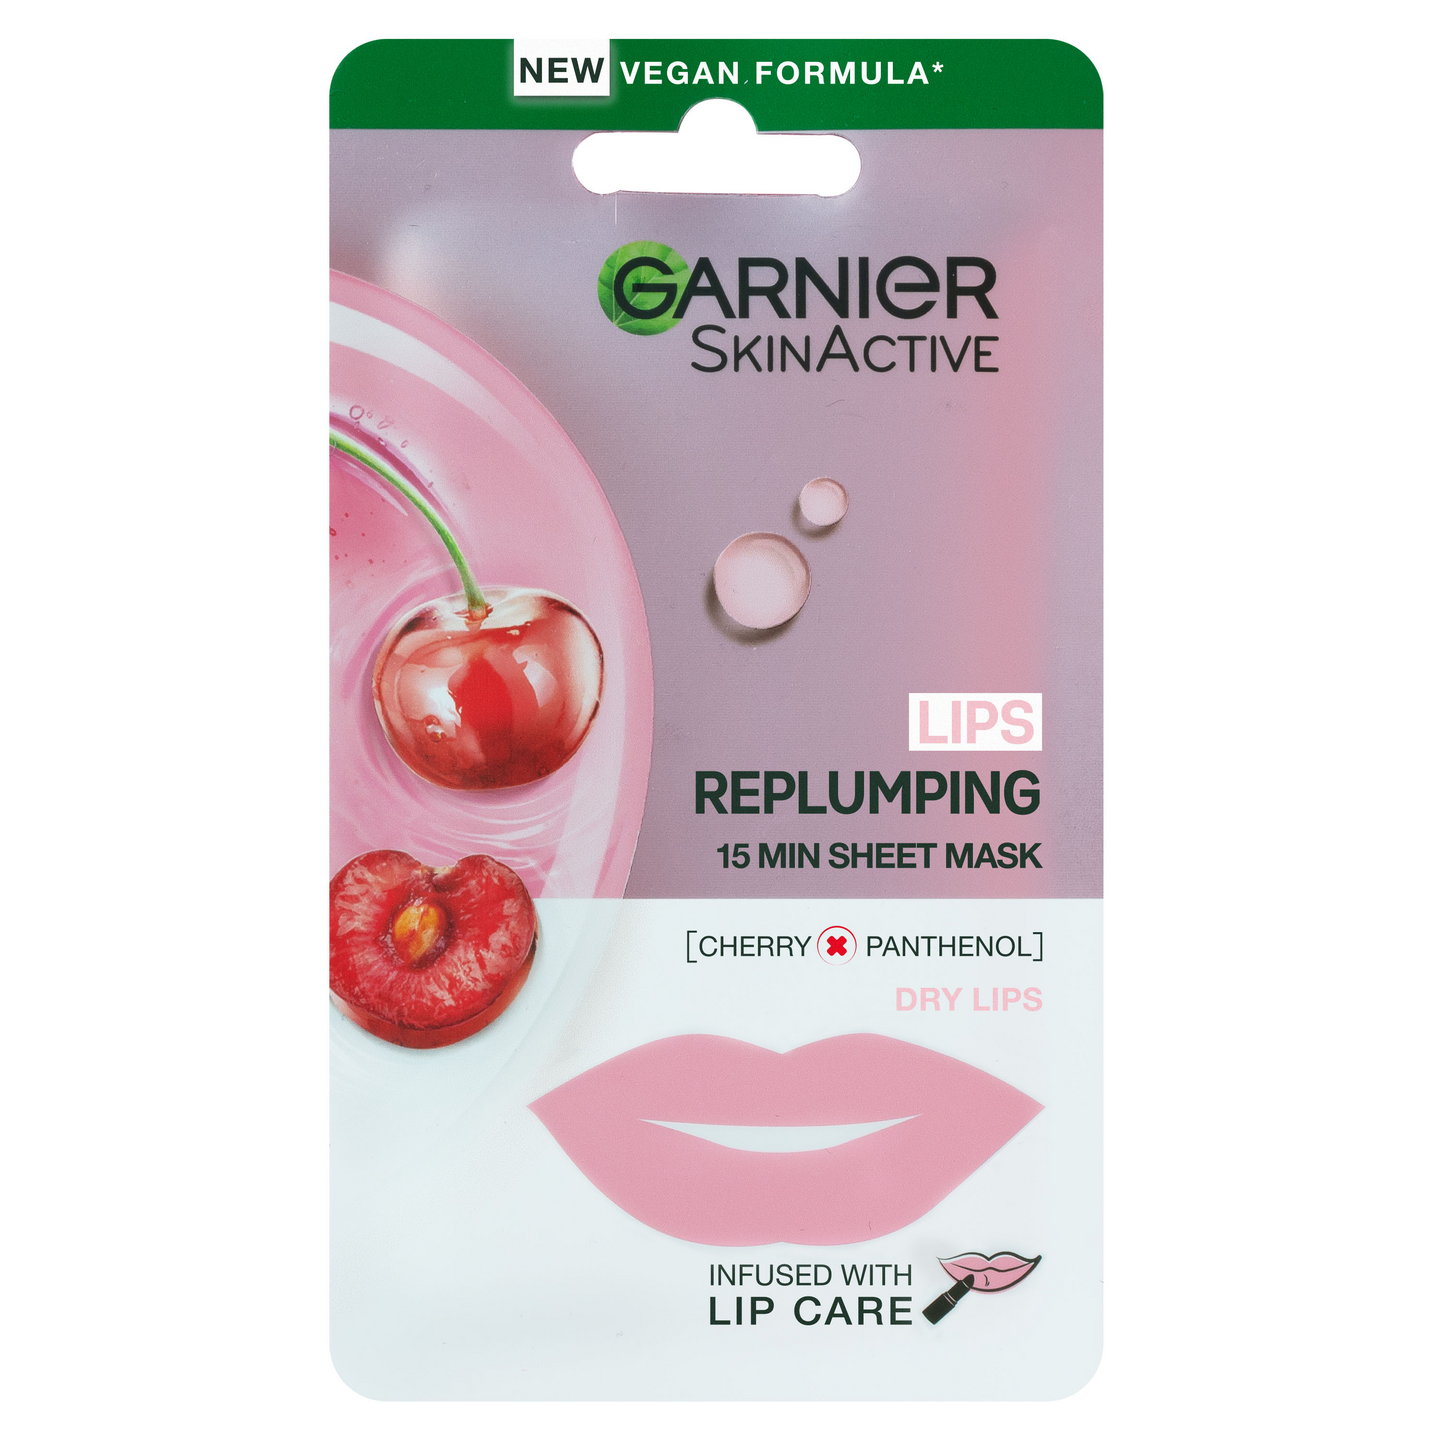 Garnier SkinActive Lips Replumping 15 Min Sheet Mask huulinaamio 5g